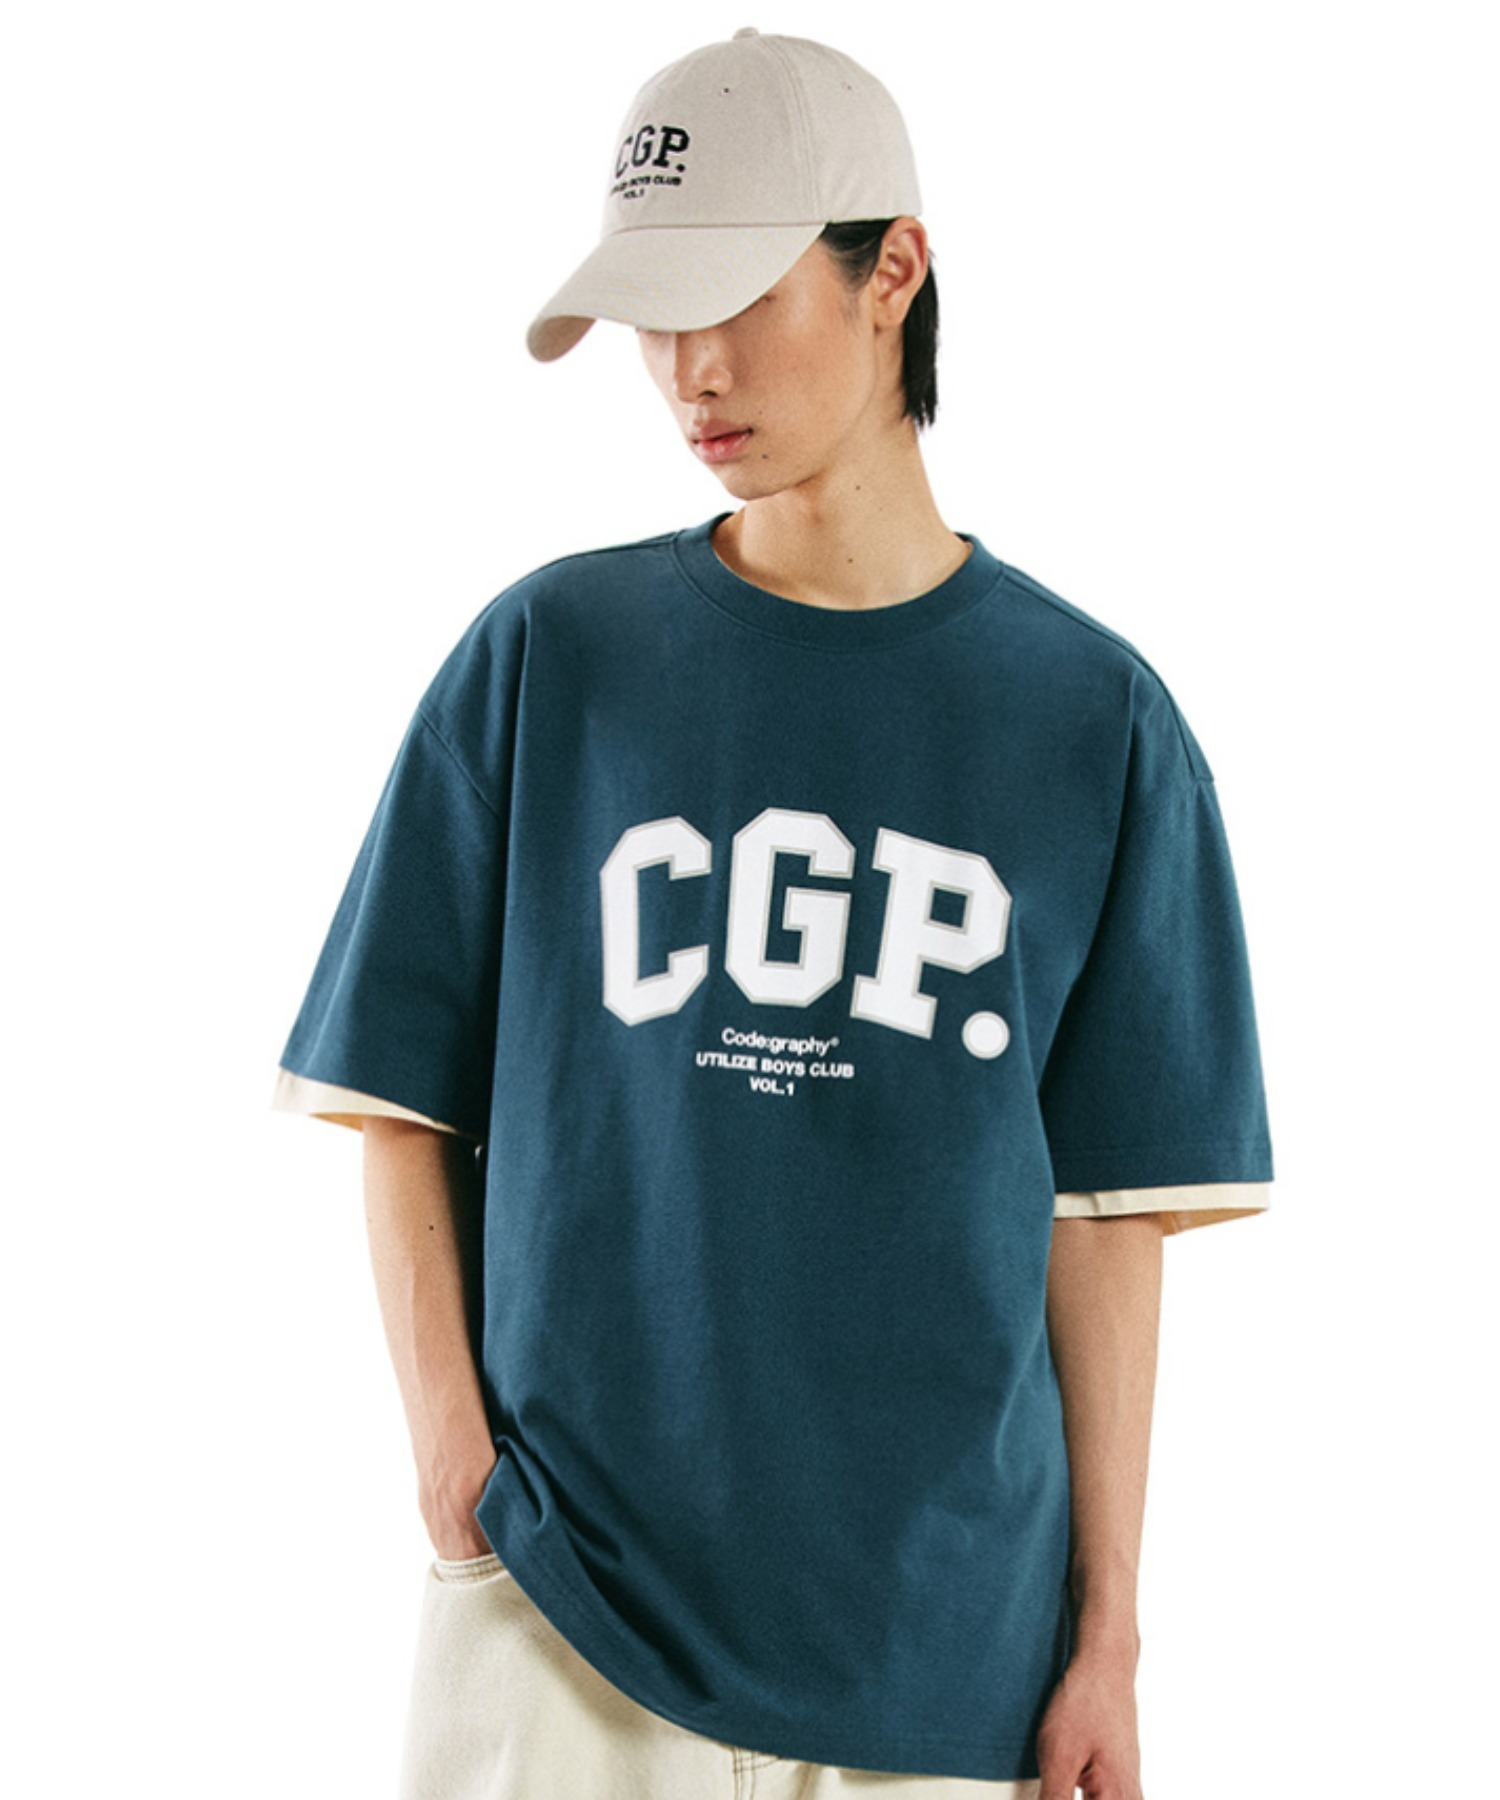 A'GEM/9 × .kom『Code:graphy/コードグラフィー』CGP Arch logo T-shirt/クールコットン素材 半袖Tシャツ